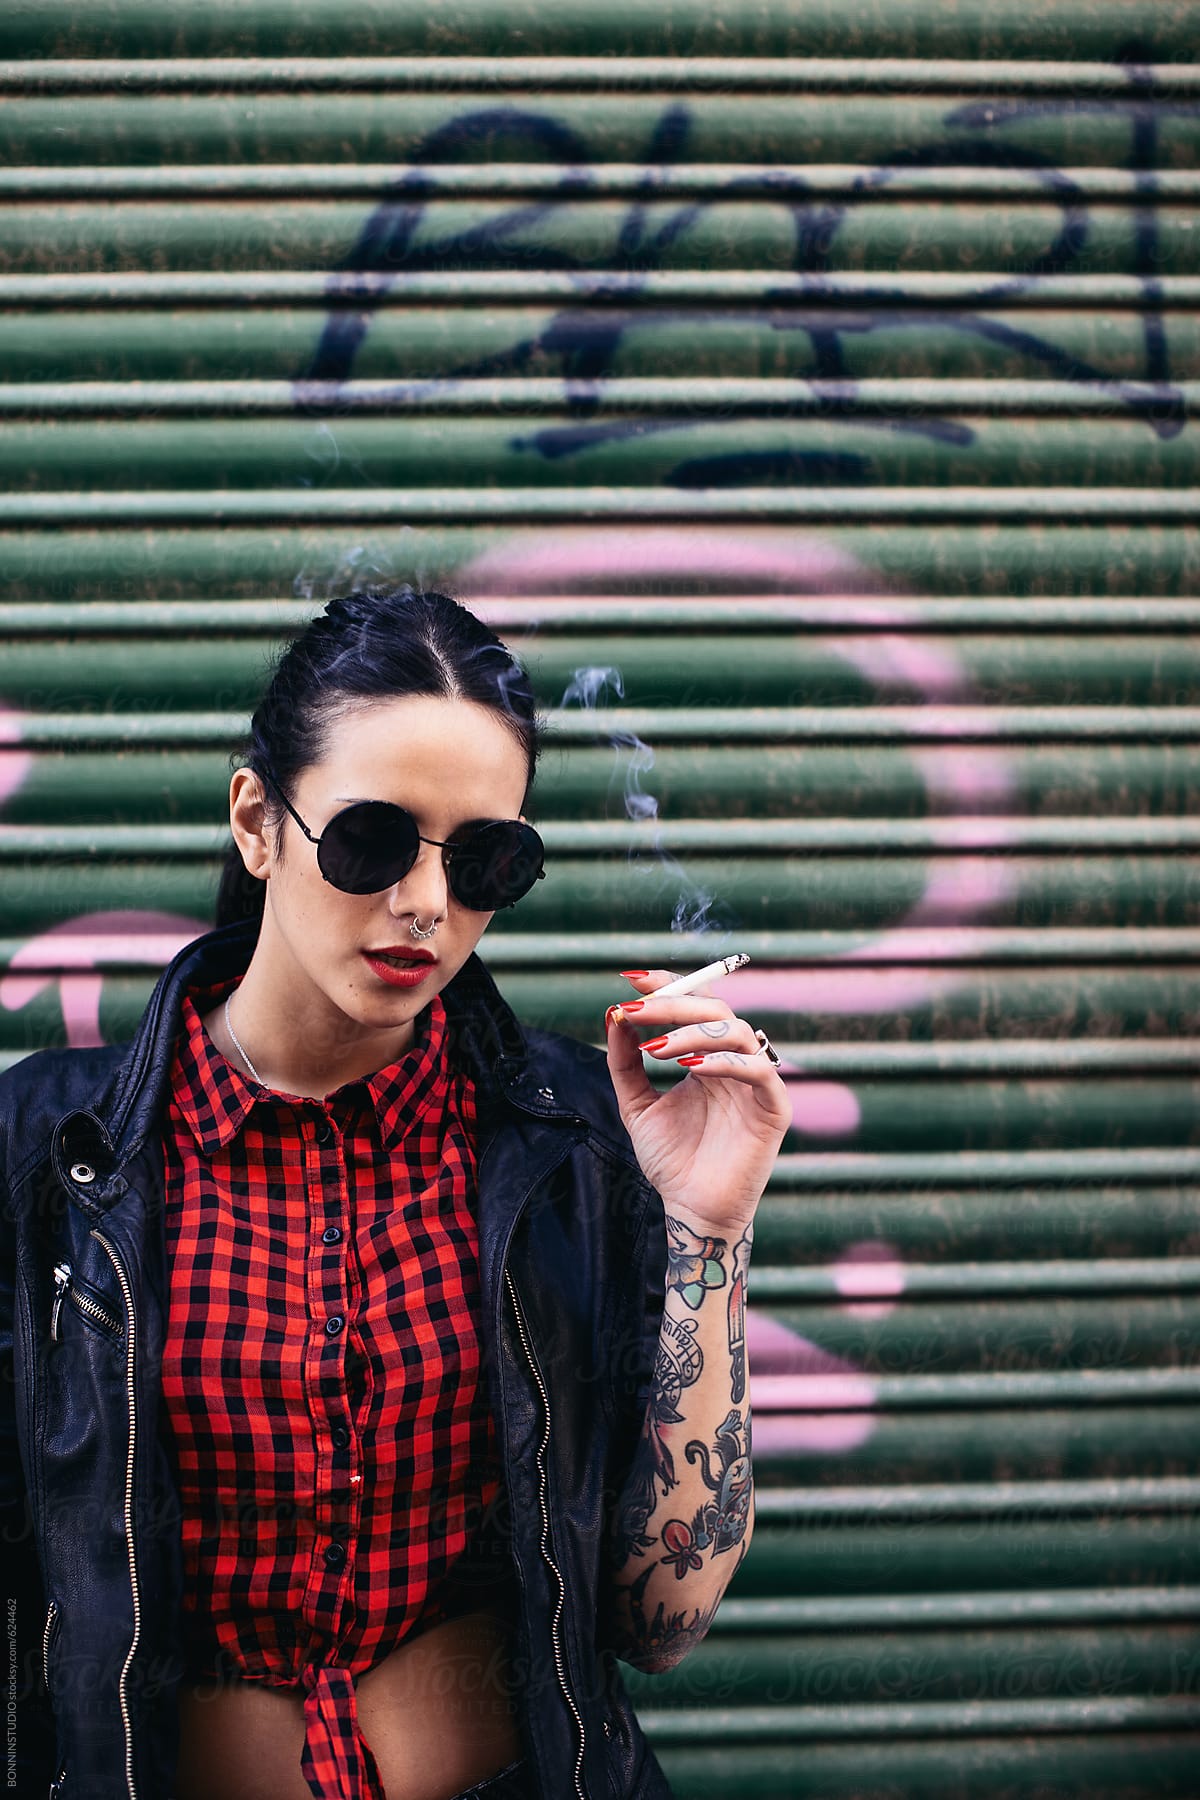 Portrait of a young alternative woman smoking in front a graffiti shutter door.